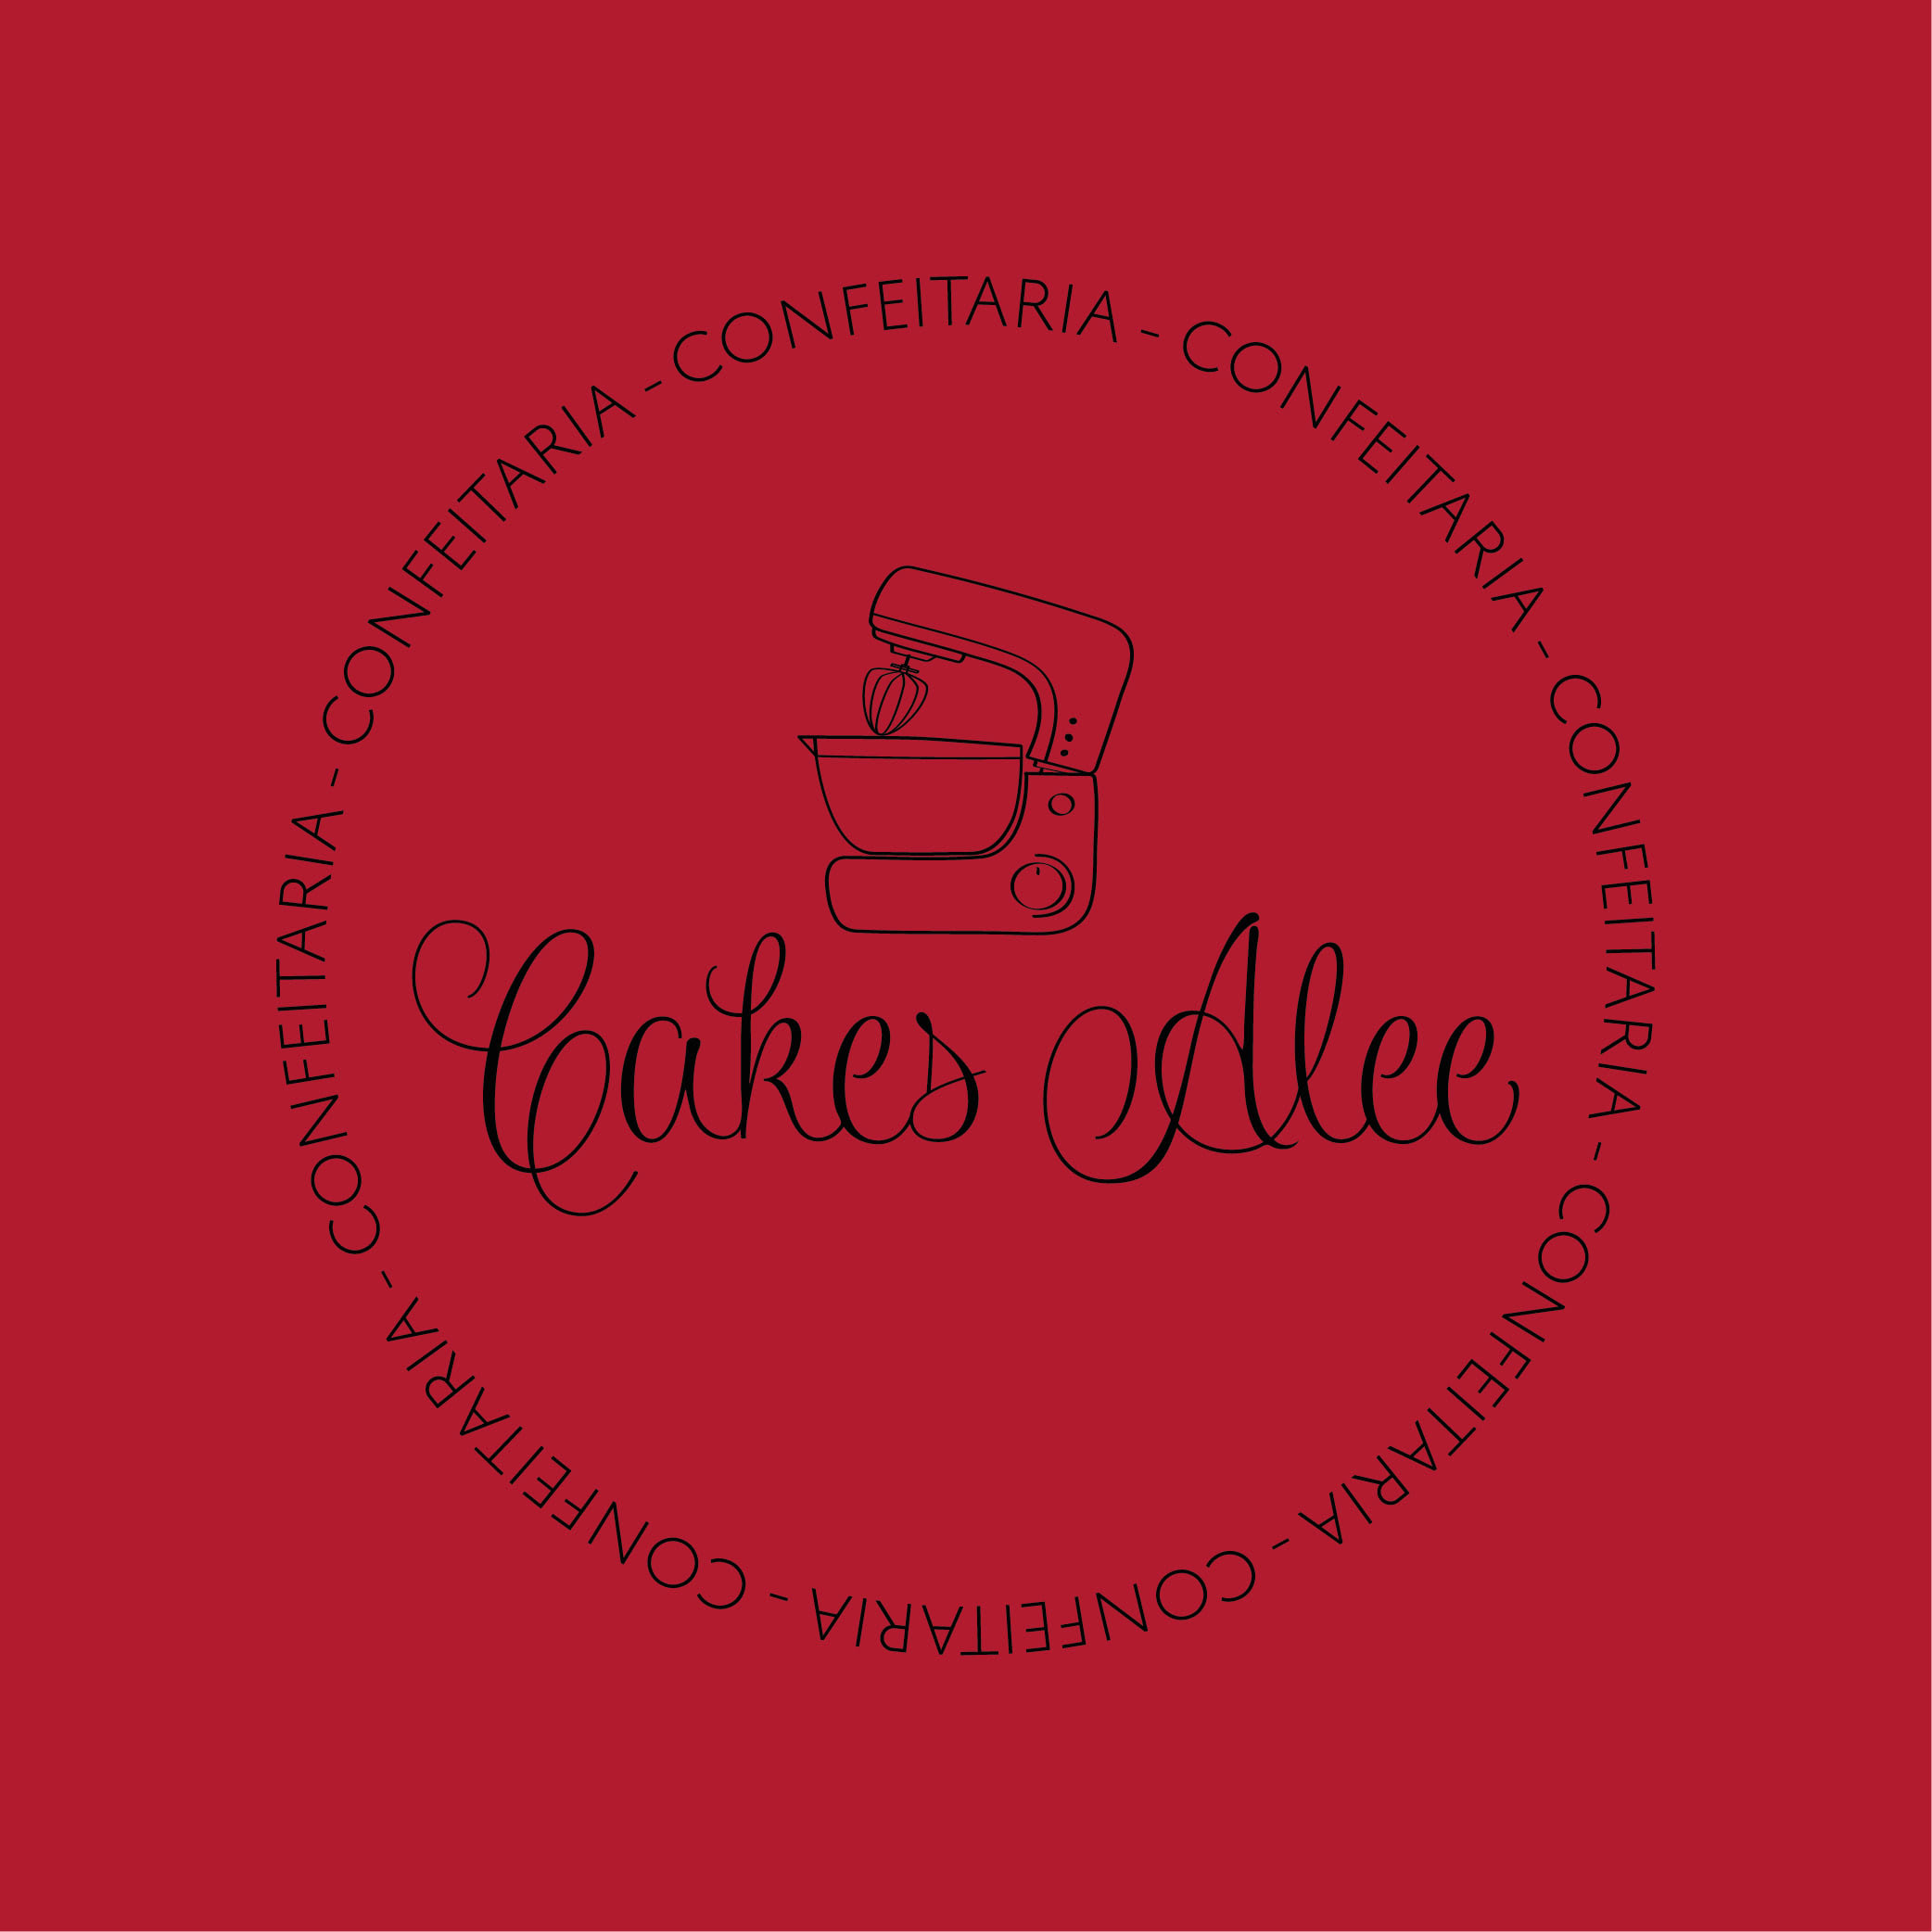 Cakes Alee